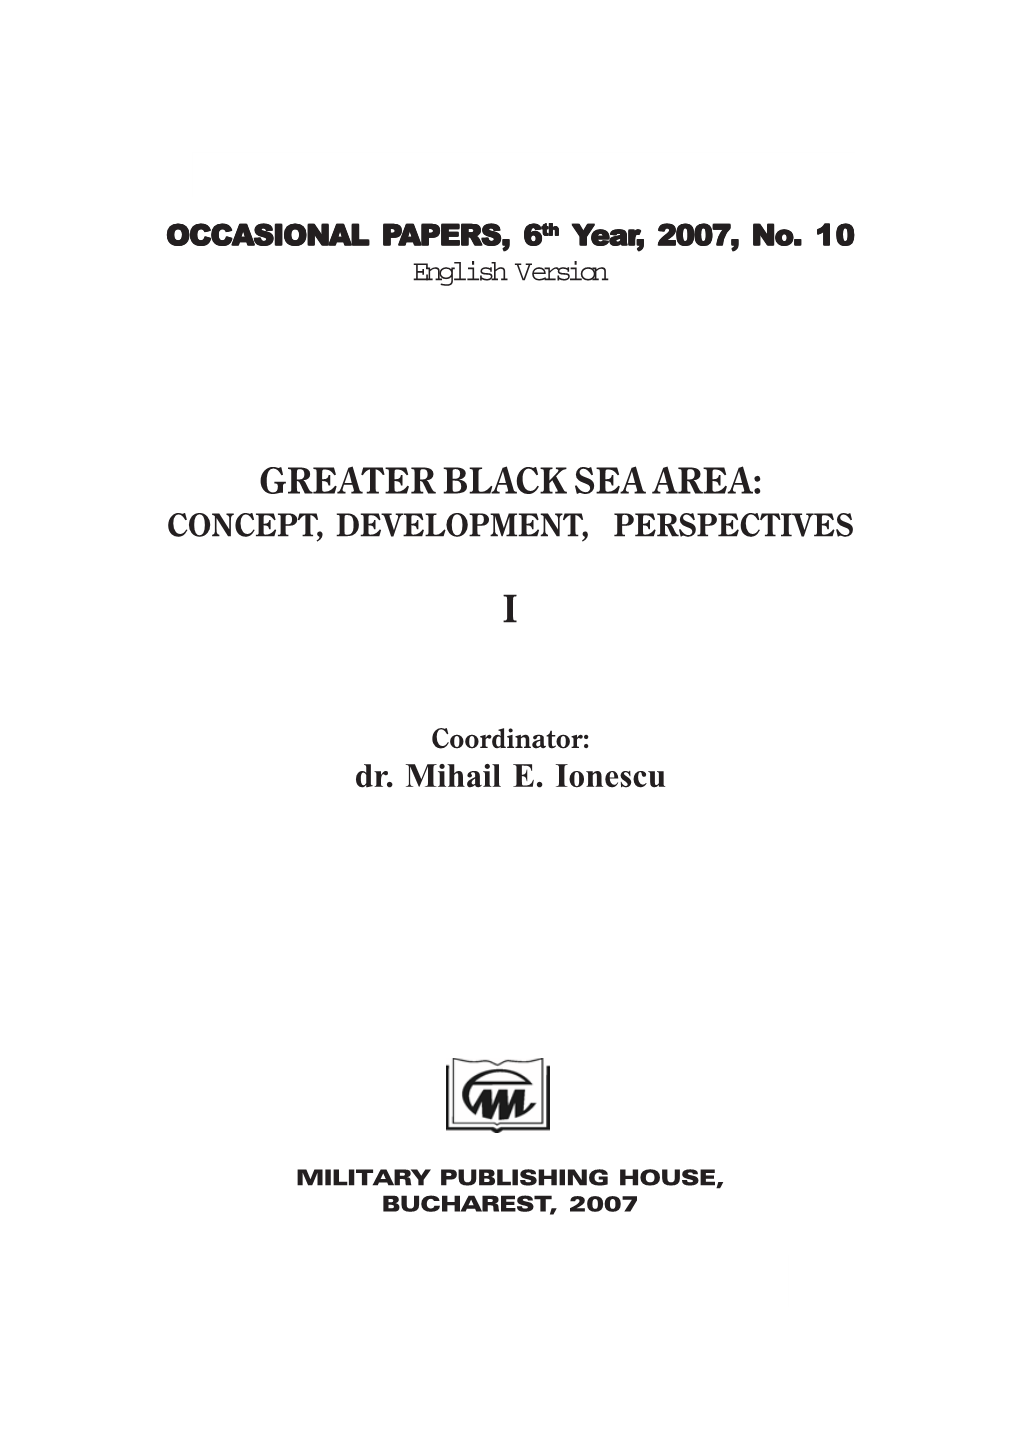 Greater Black Sea Area> Concept, Development, Perspectives